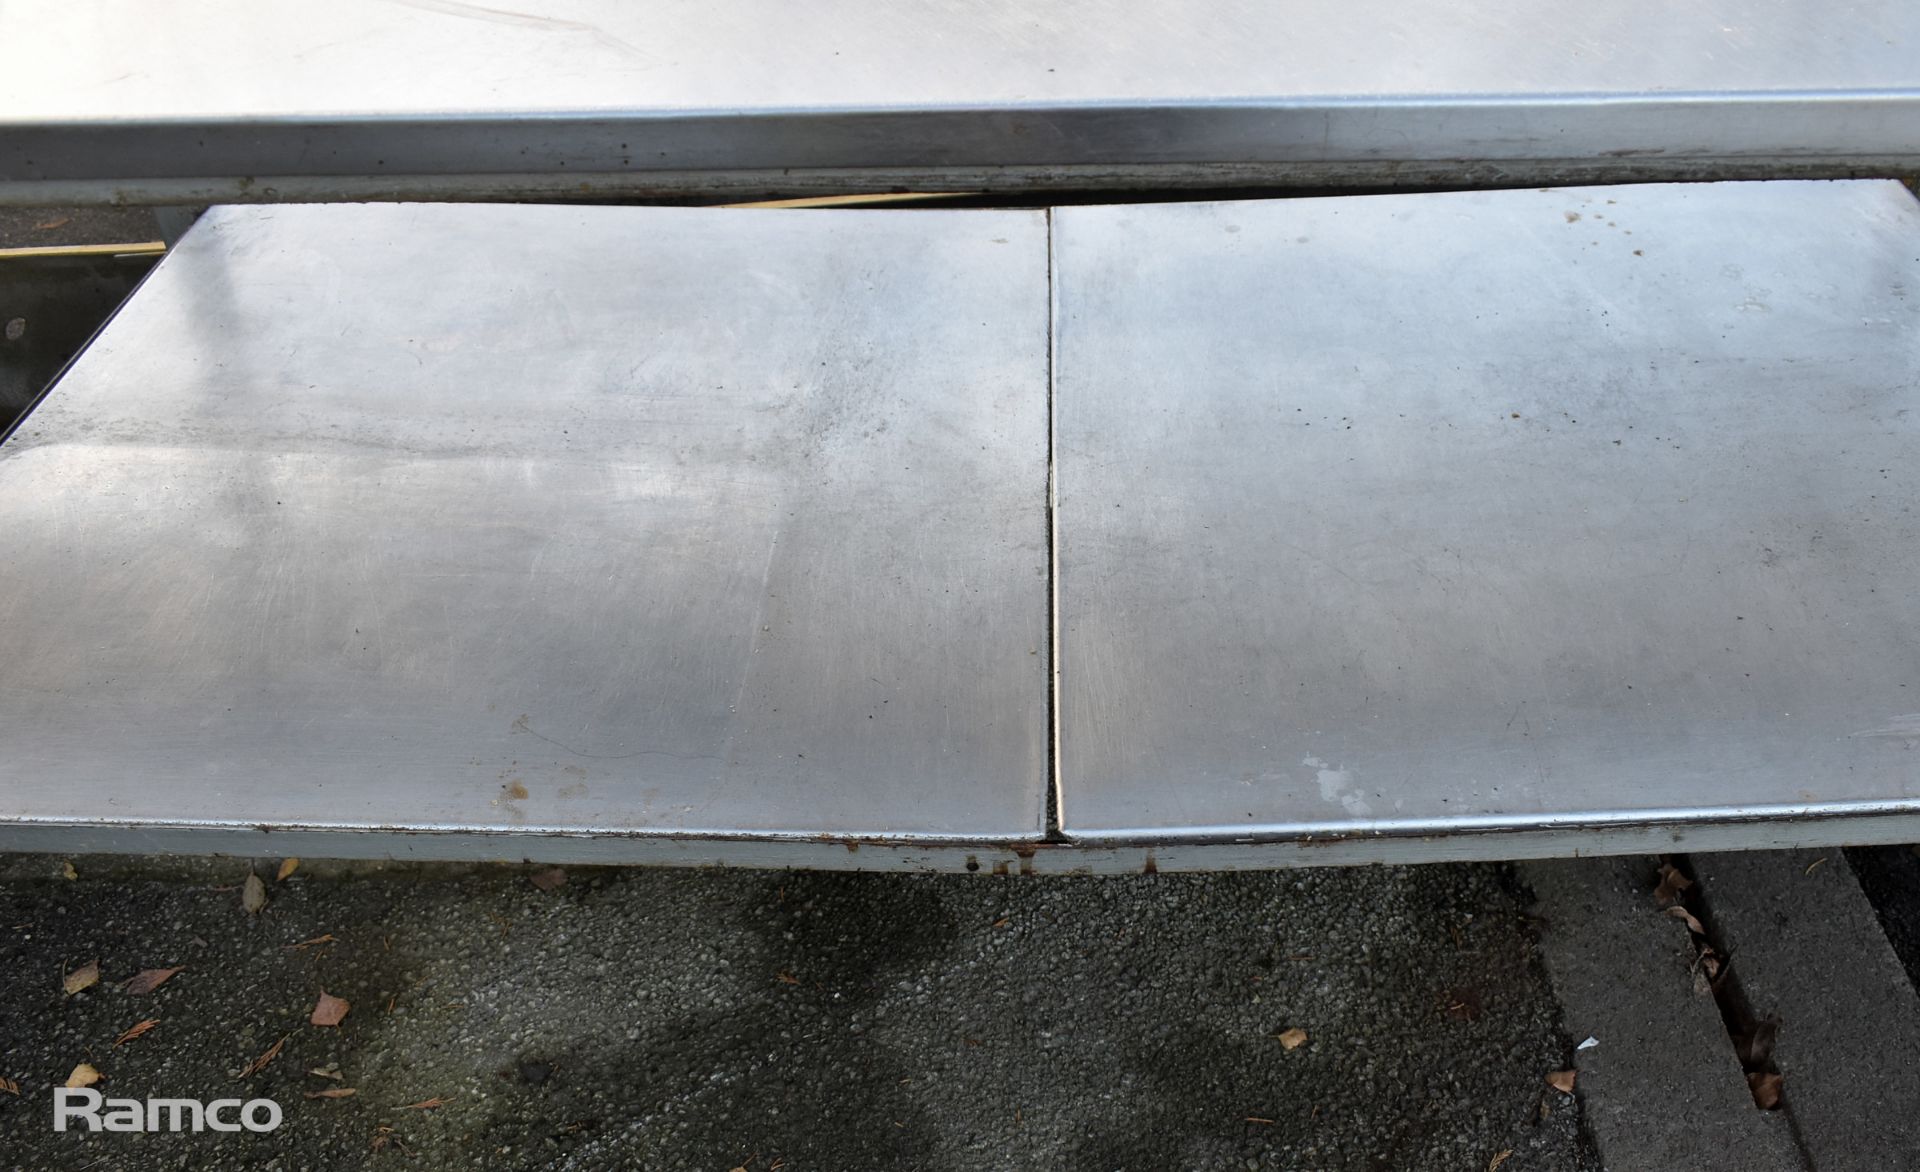 Stainless steel preparation table - L 1680 x W 870 x H 840mm - Bild 3 aus 3